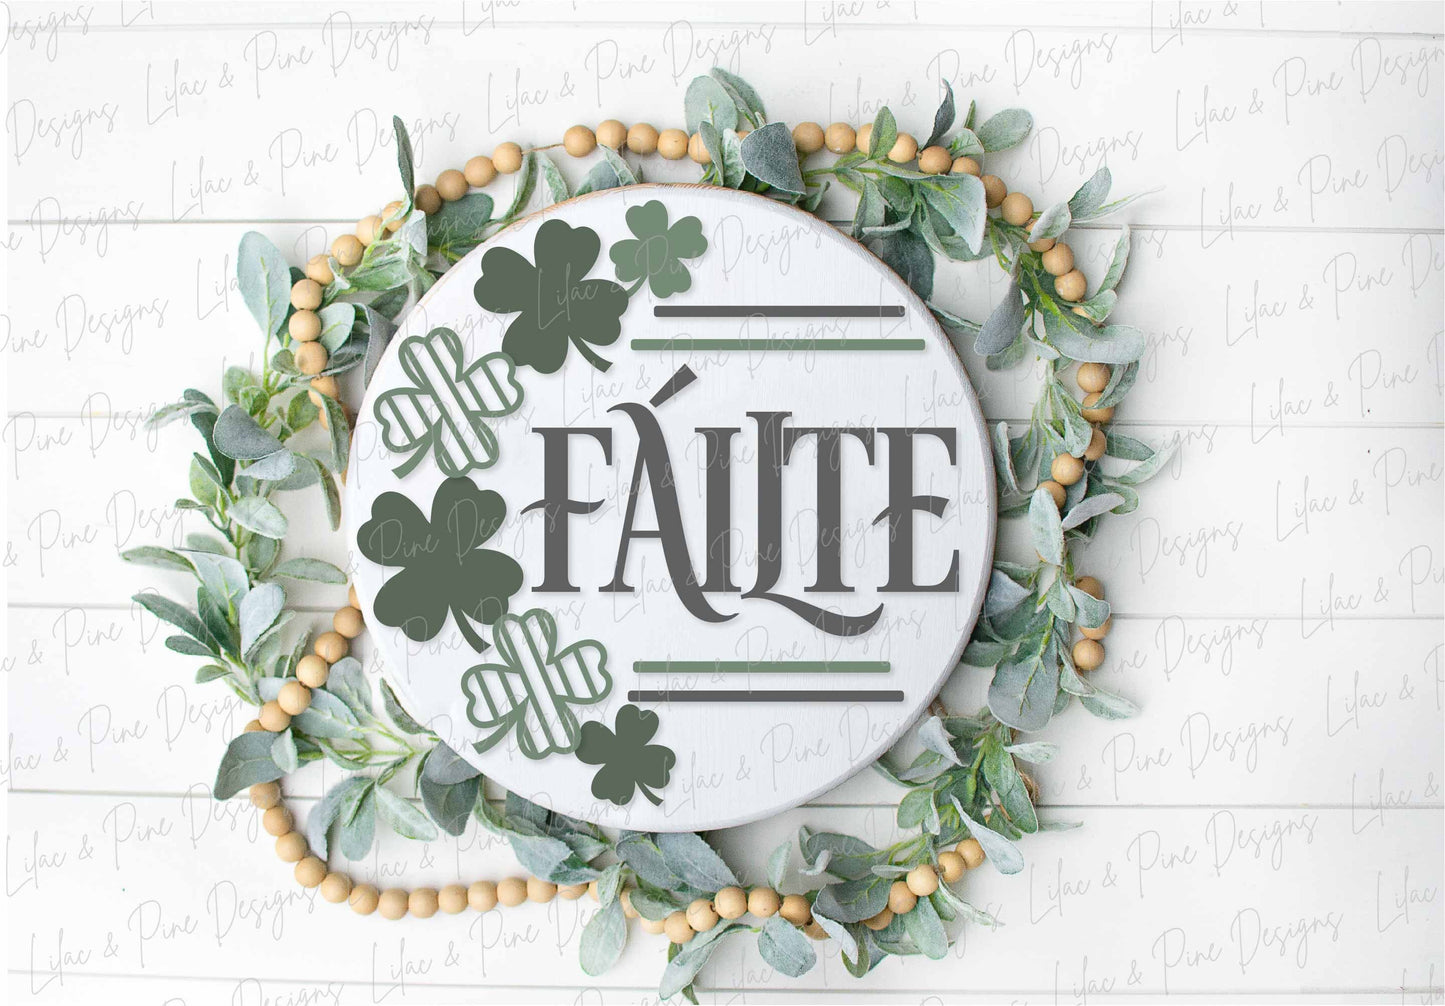 Failte sign SVG, St Patricks Day door hanger, Shamrock Welcome sign SVG, luck of the Irish door round svg, Glowforge SVG, laser cut file